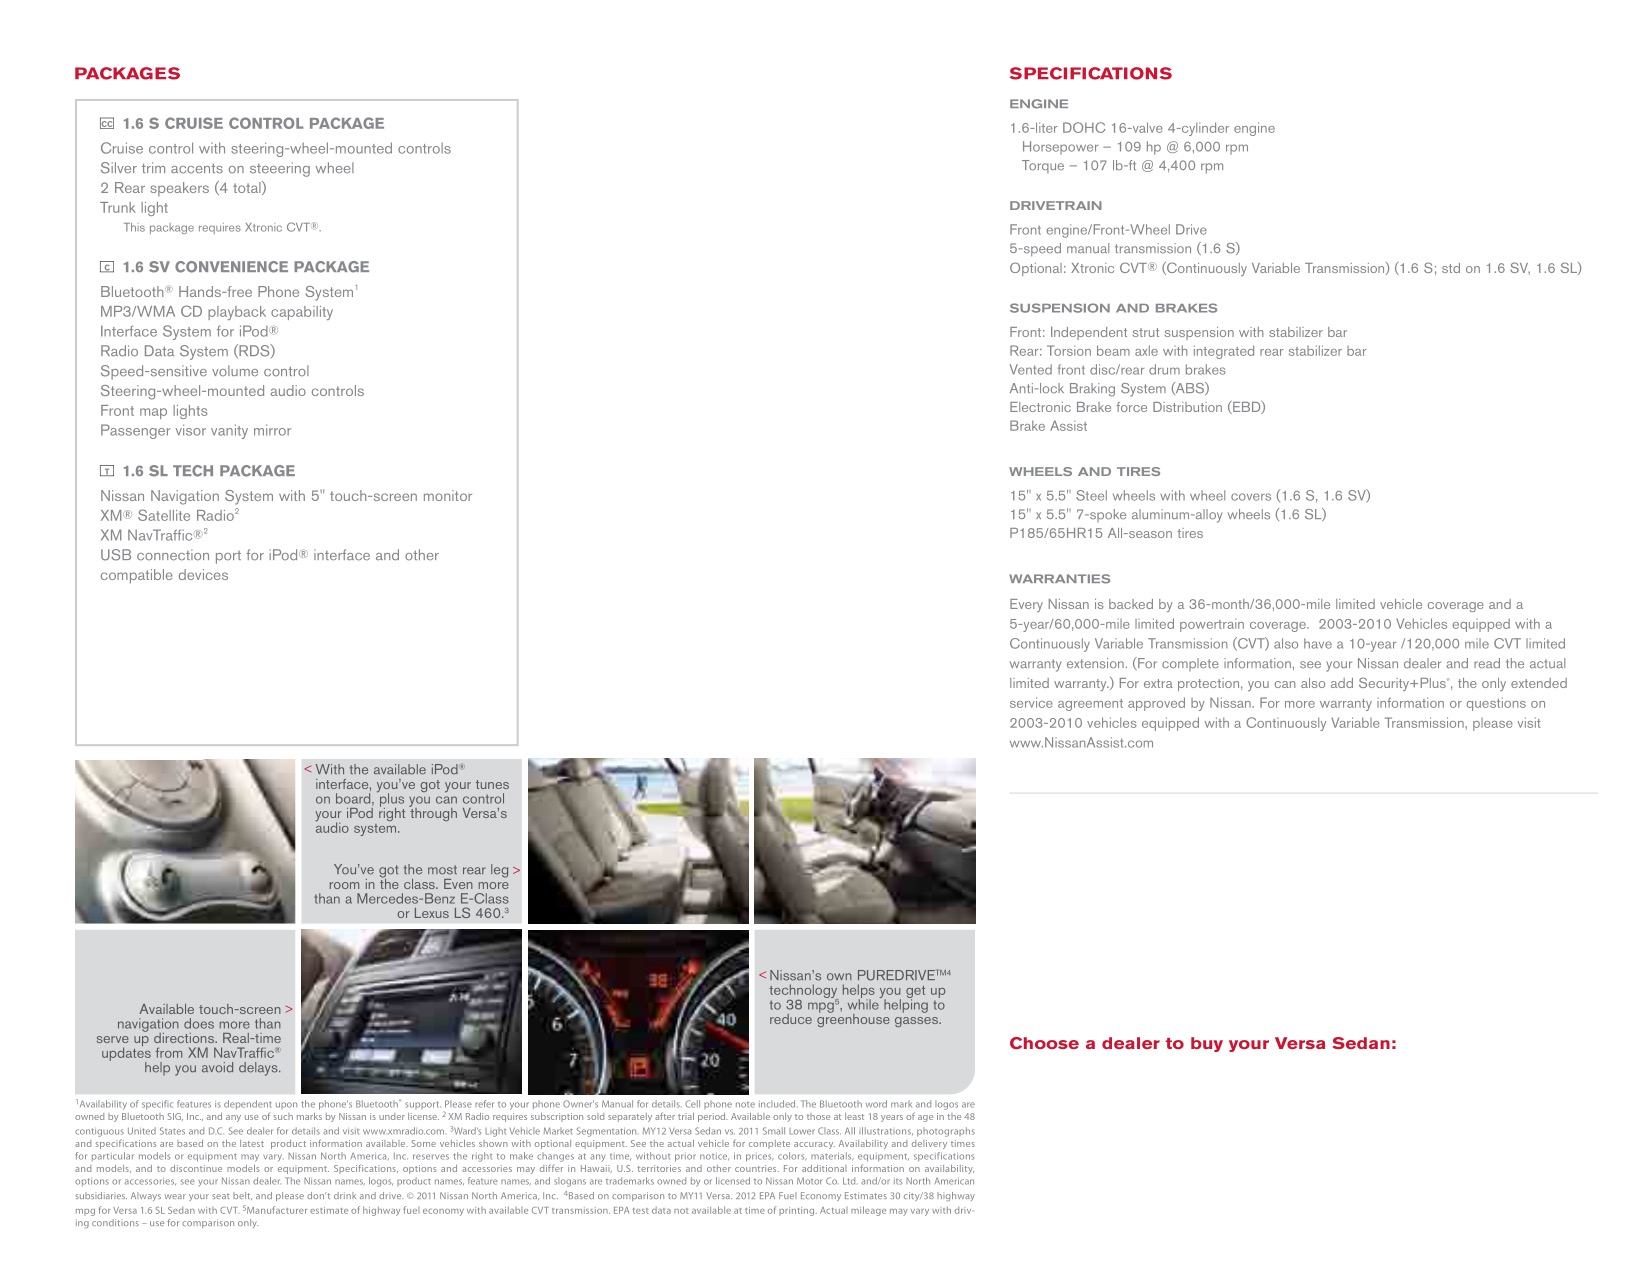 2012 Nissan Versa Sedan Brochure Page 2